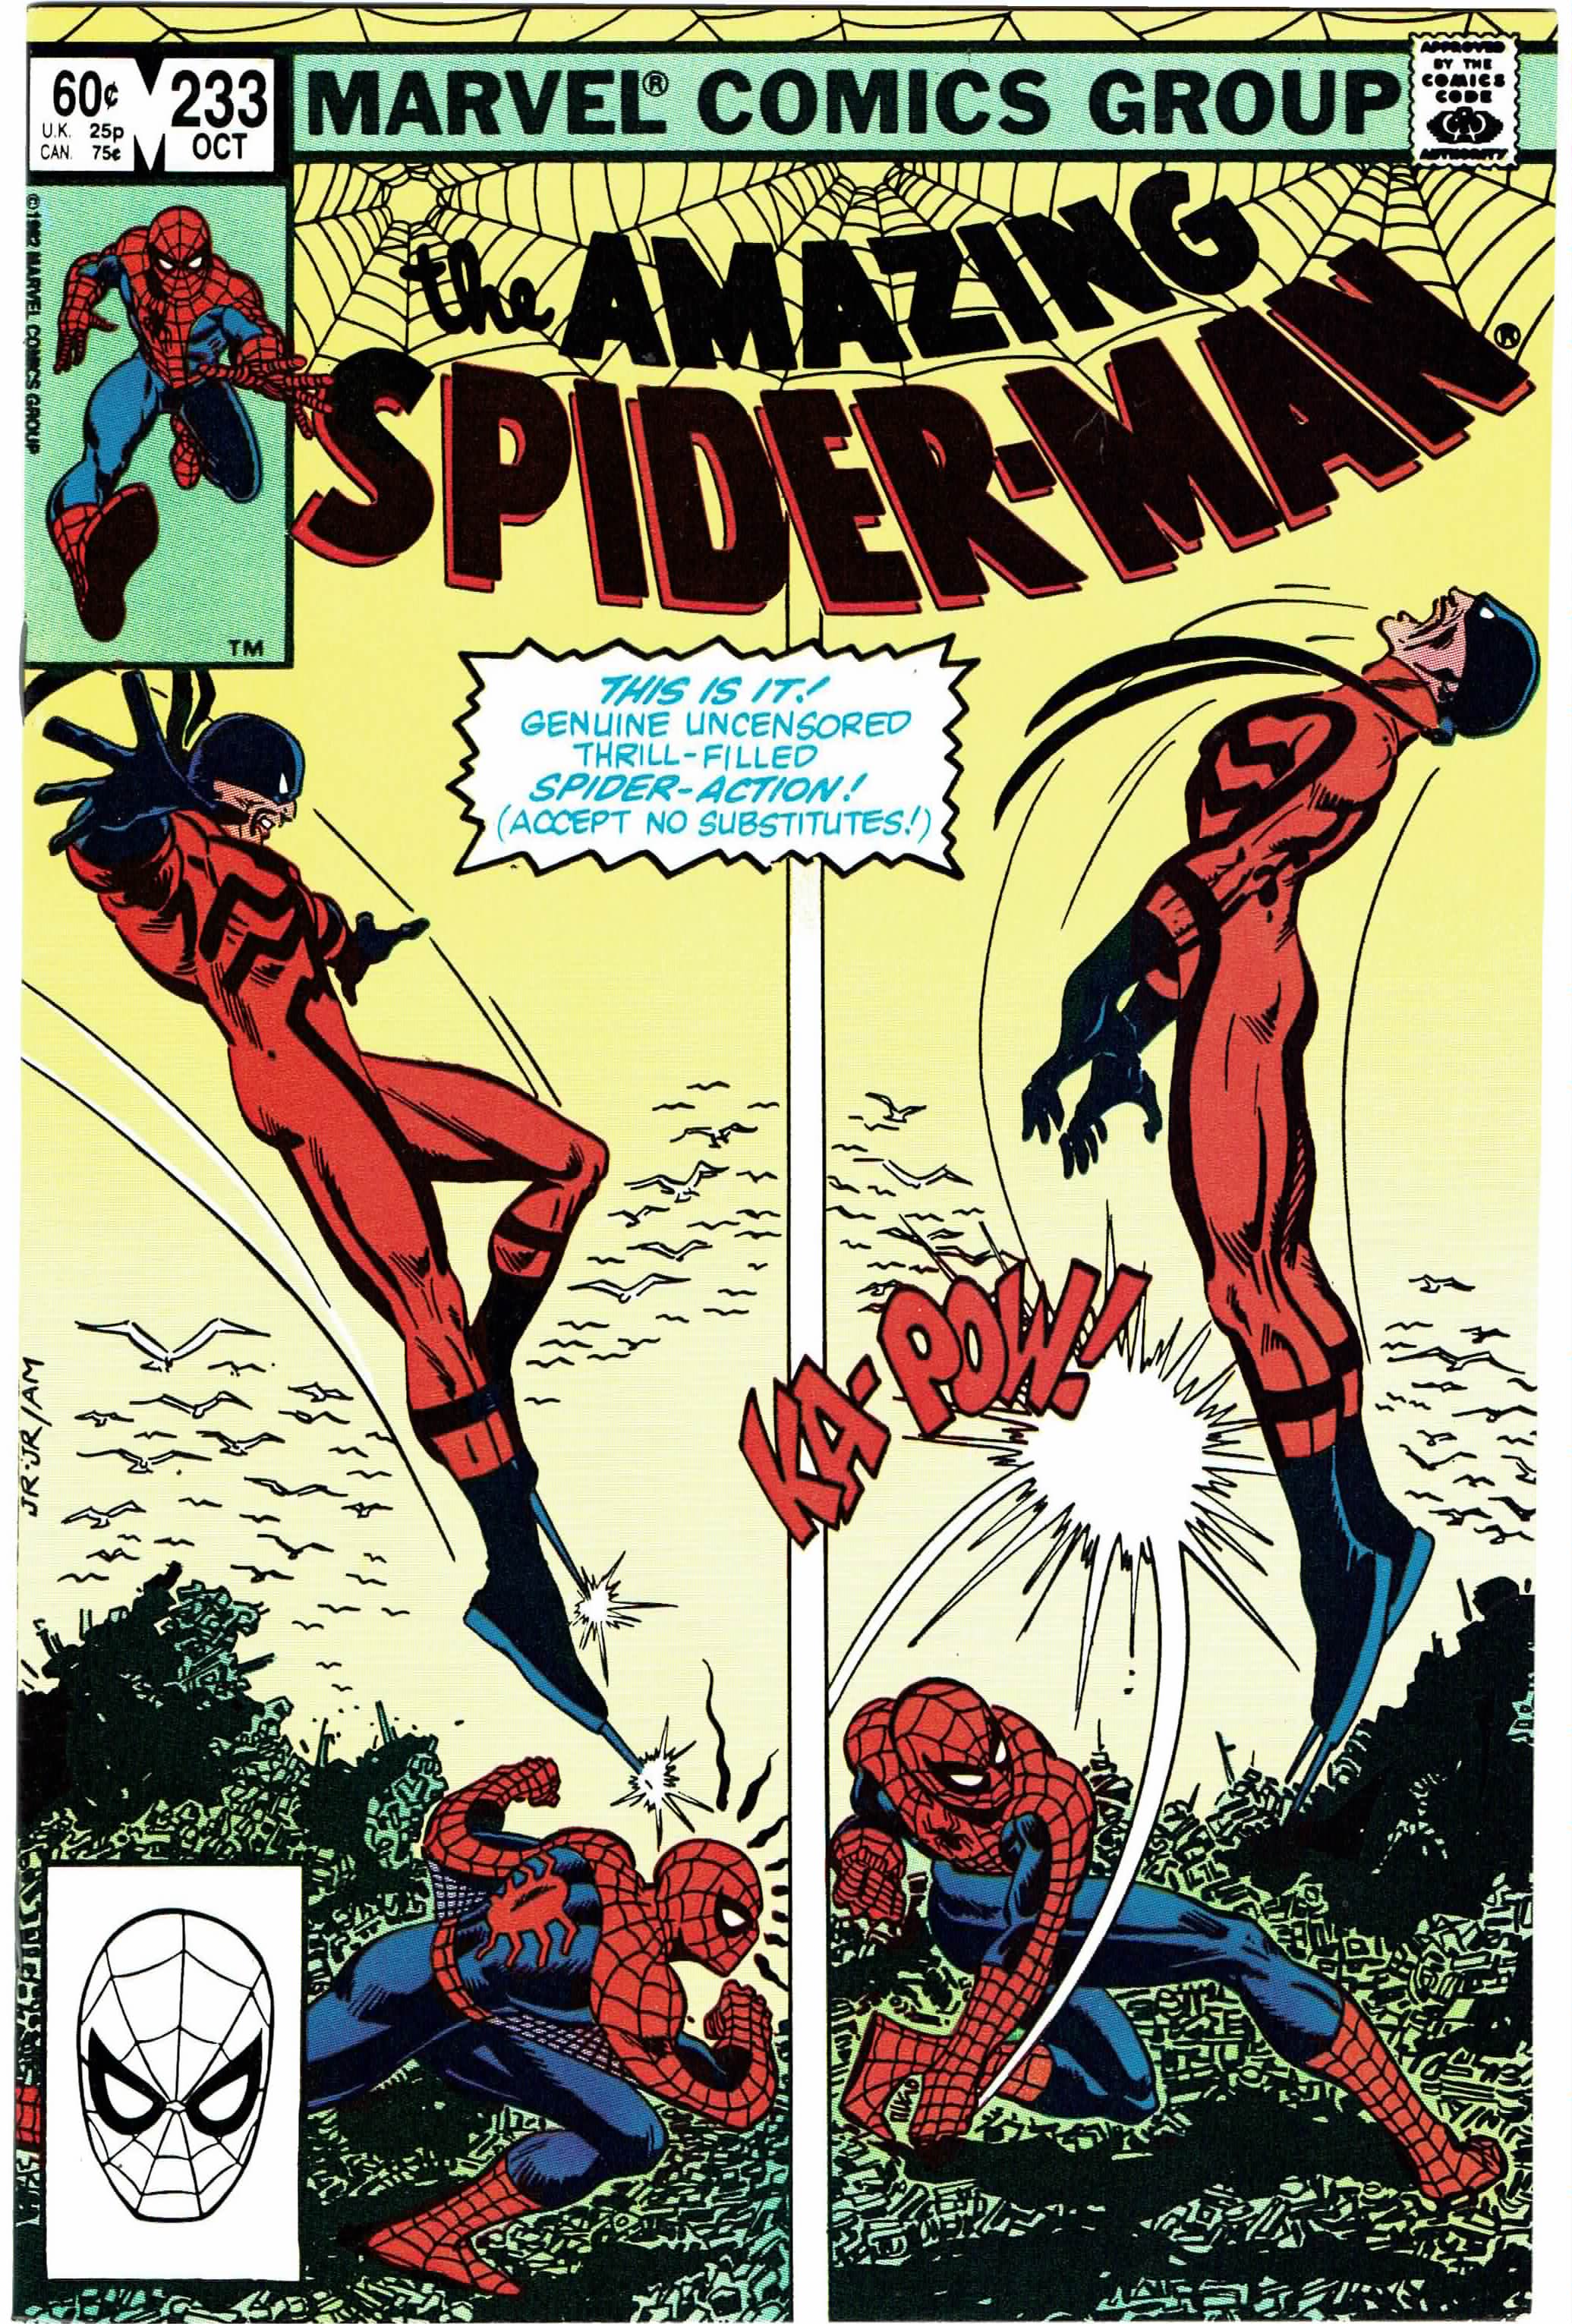 SPIDER-MAN #39 MARVEL COMICS 1993 NM+